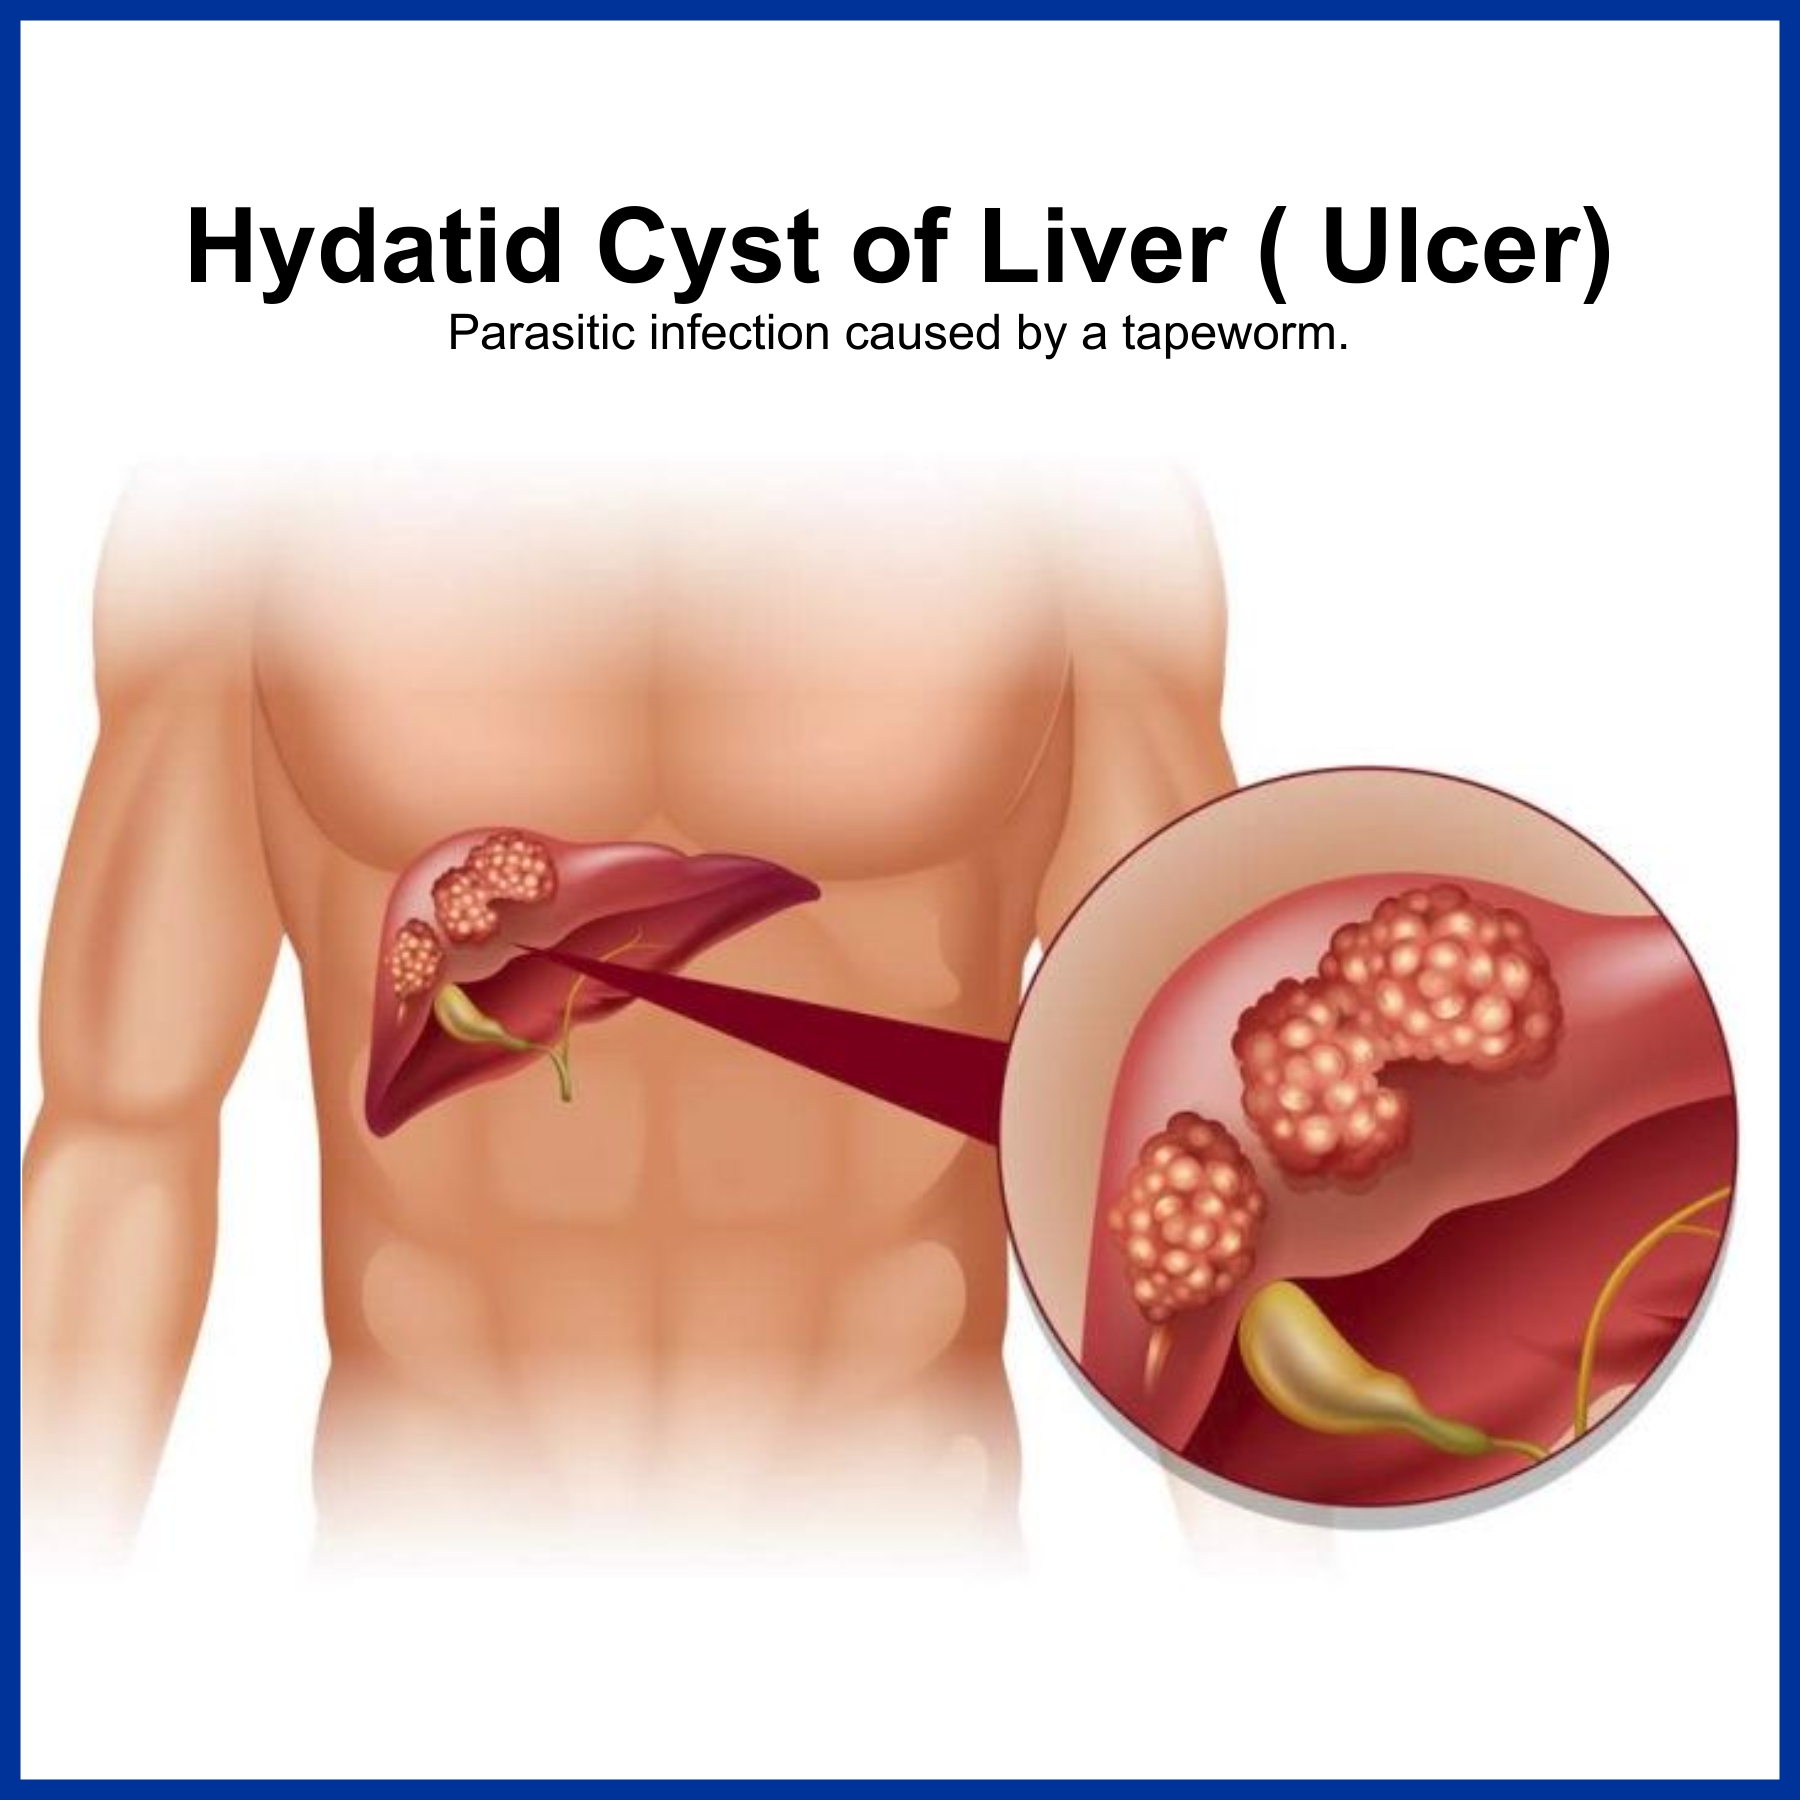 Hydatid Cyst of Liver